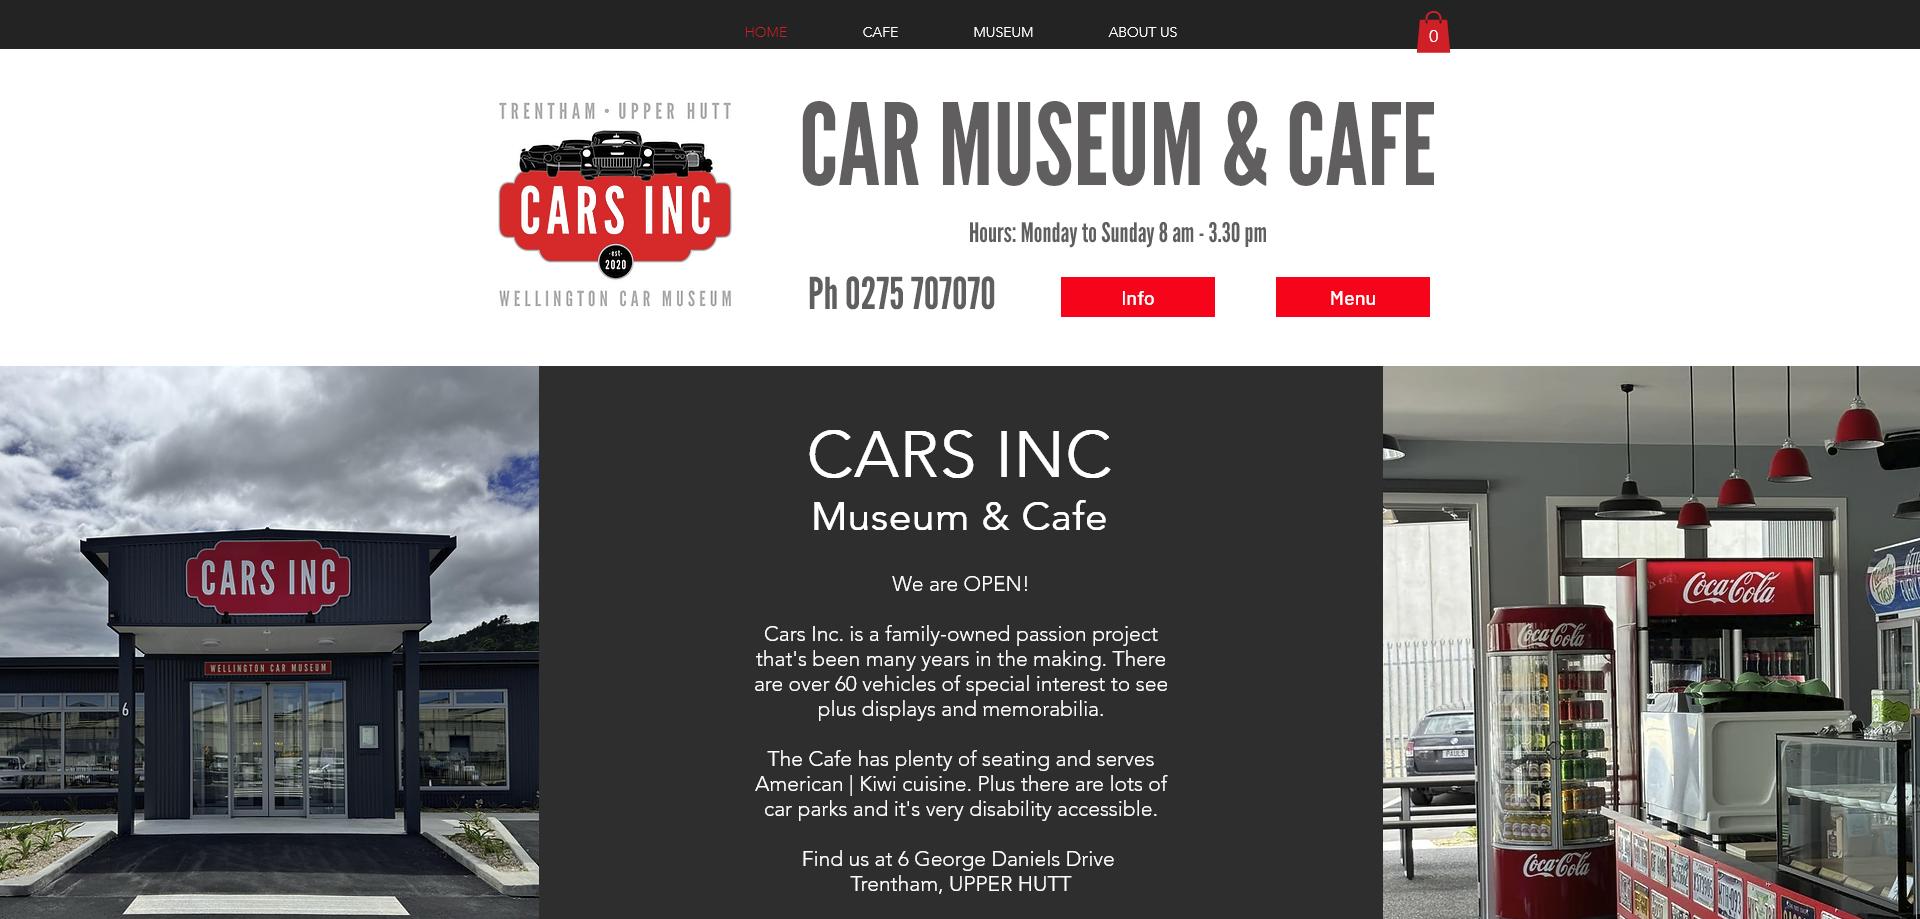 CARS INC Museum & Cafe